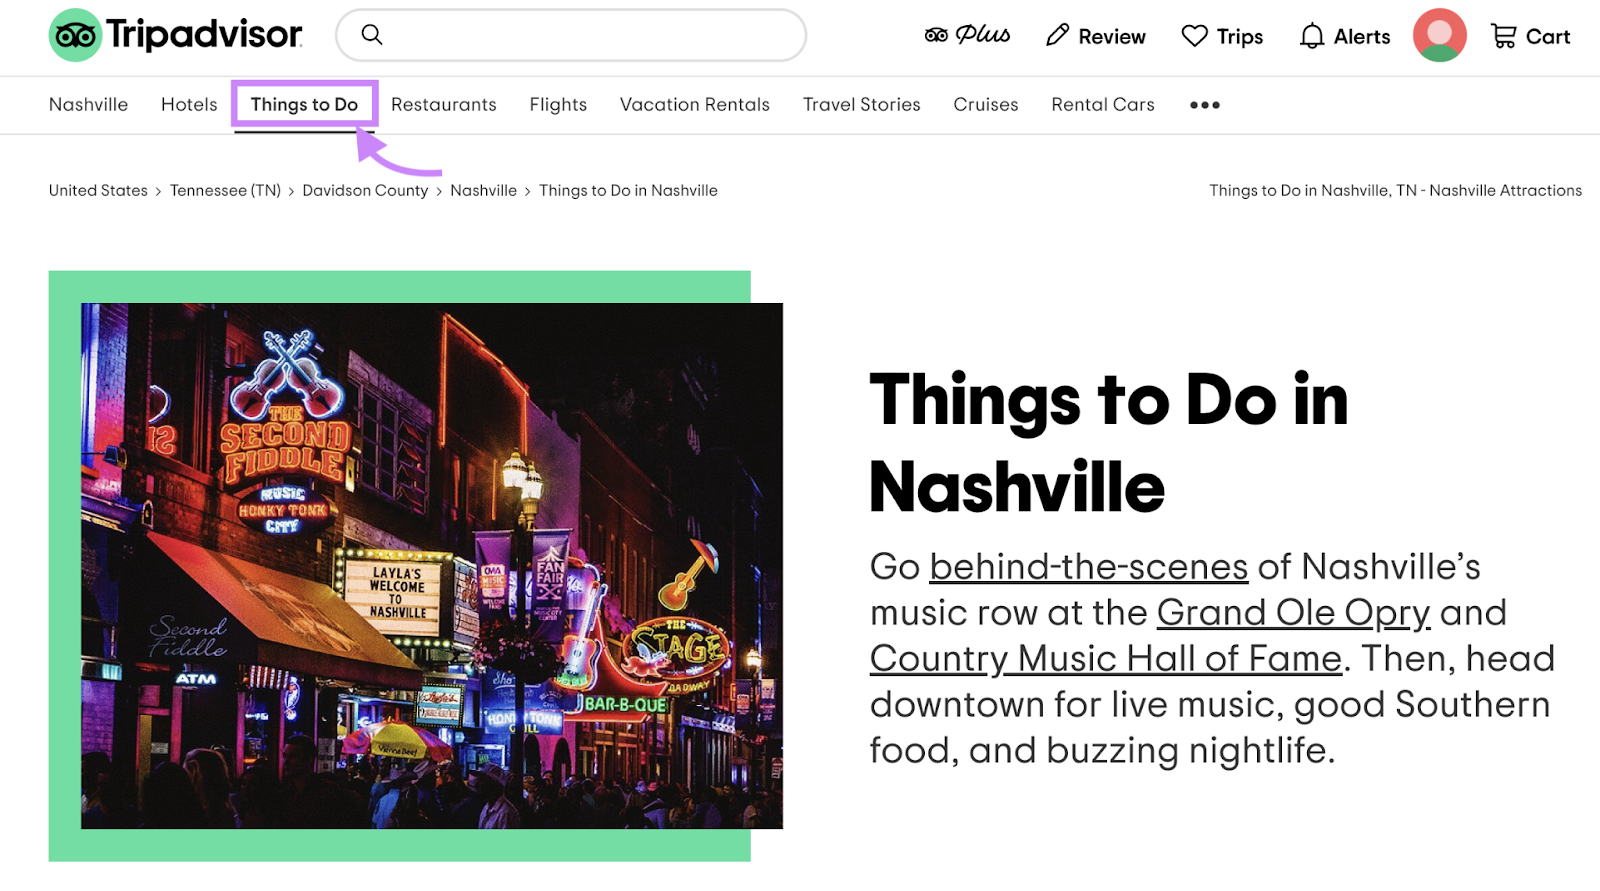 “things to do in Nashville” on Tripadvisor